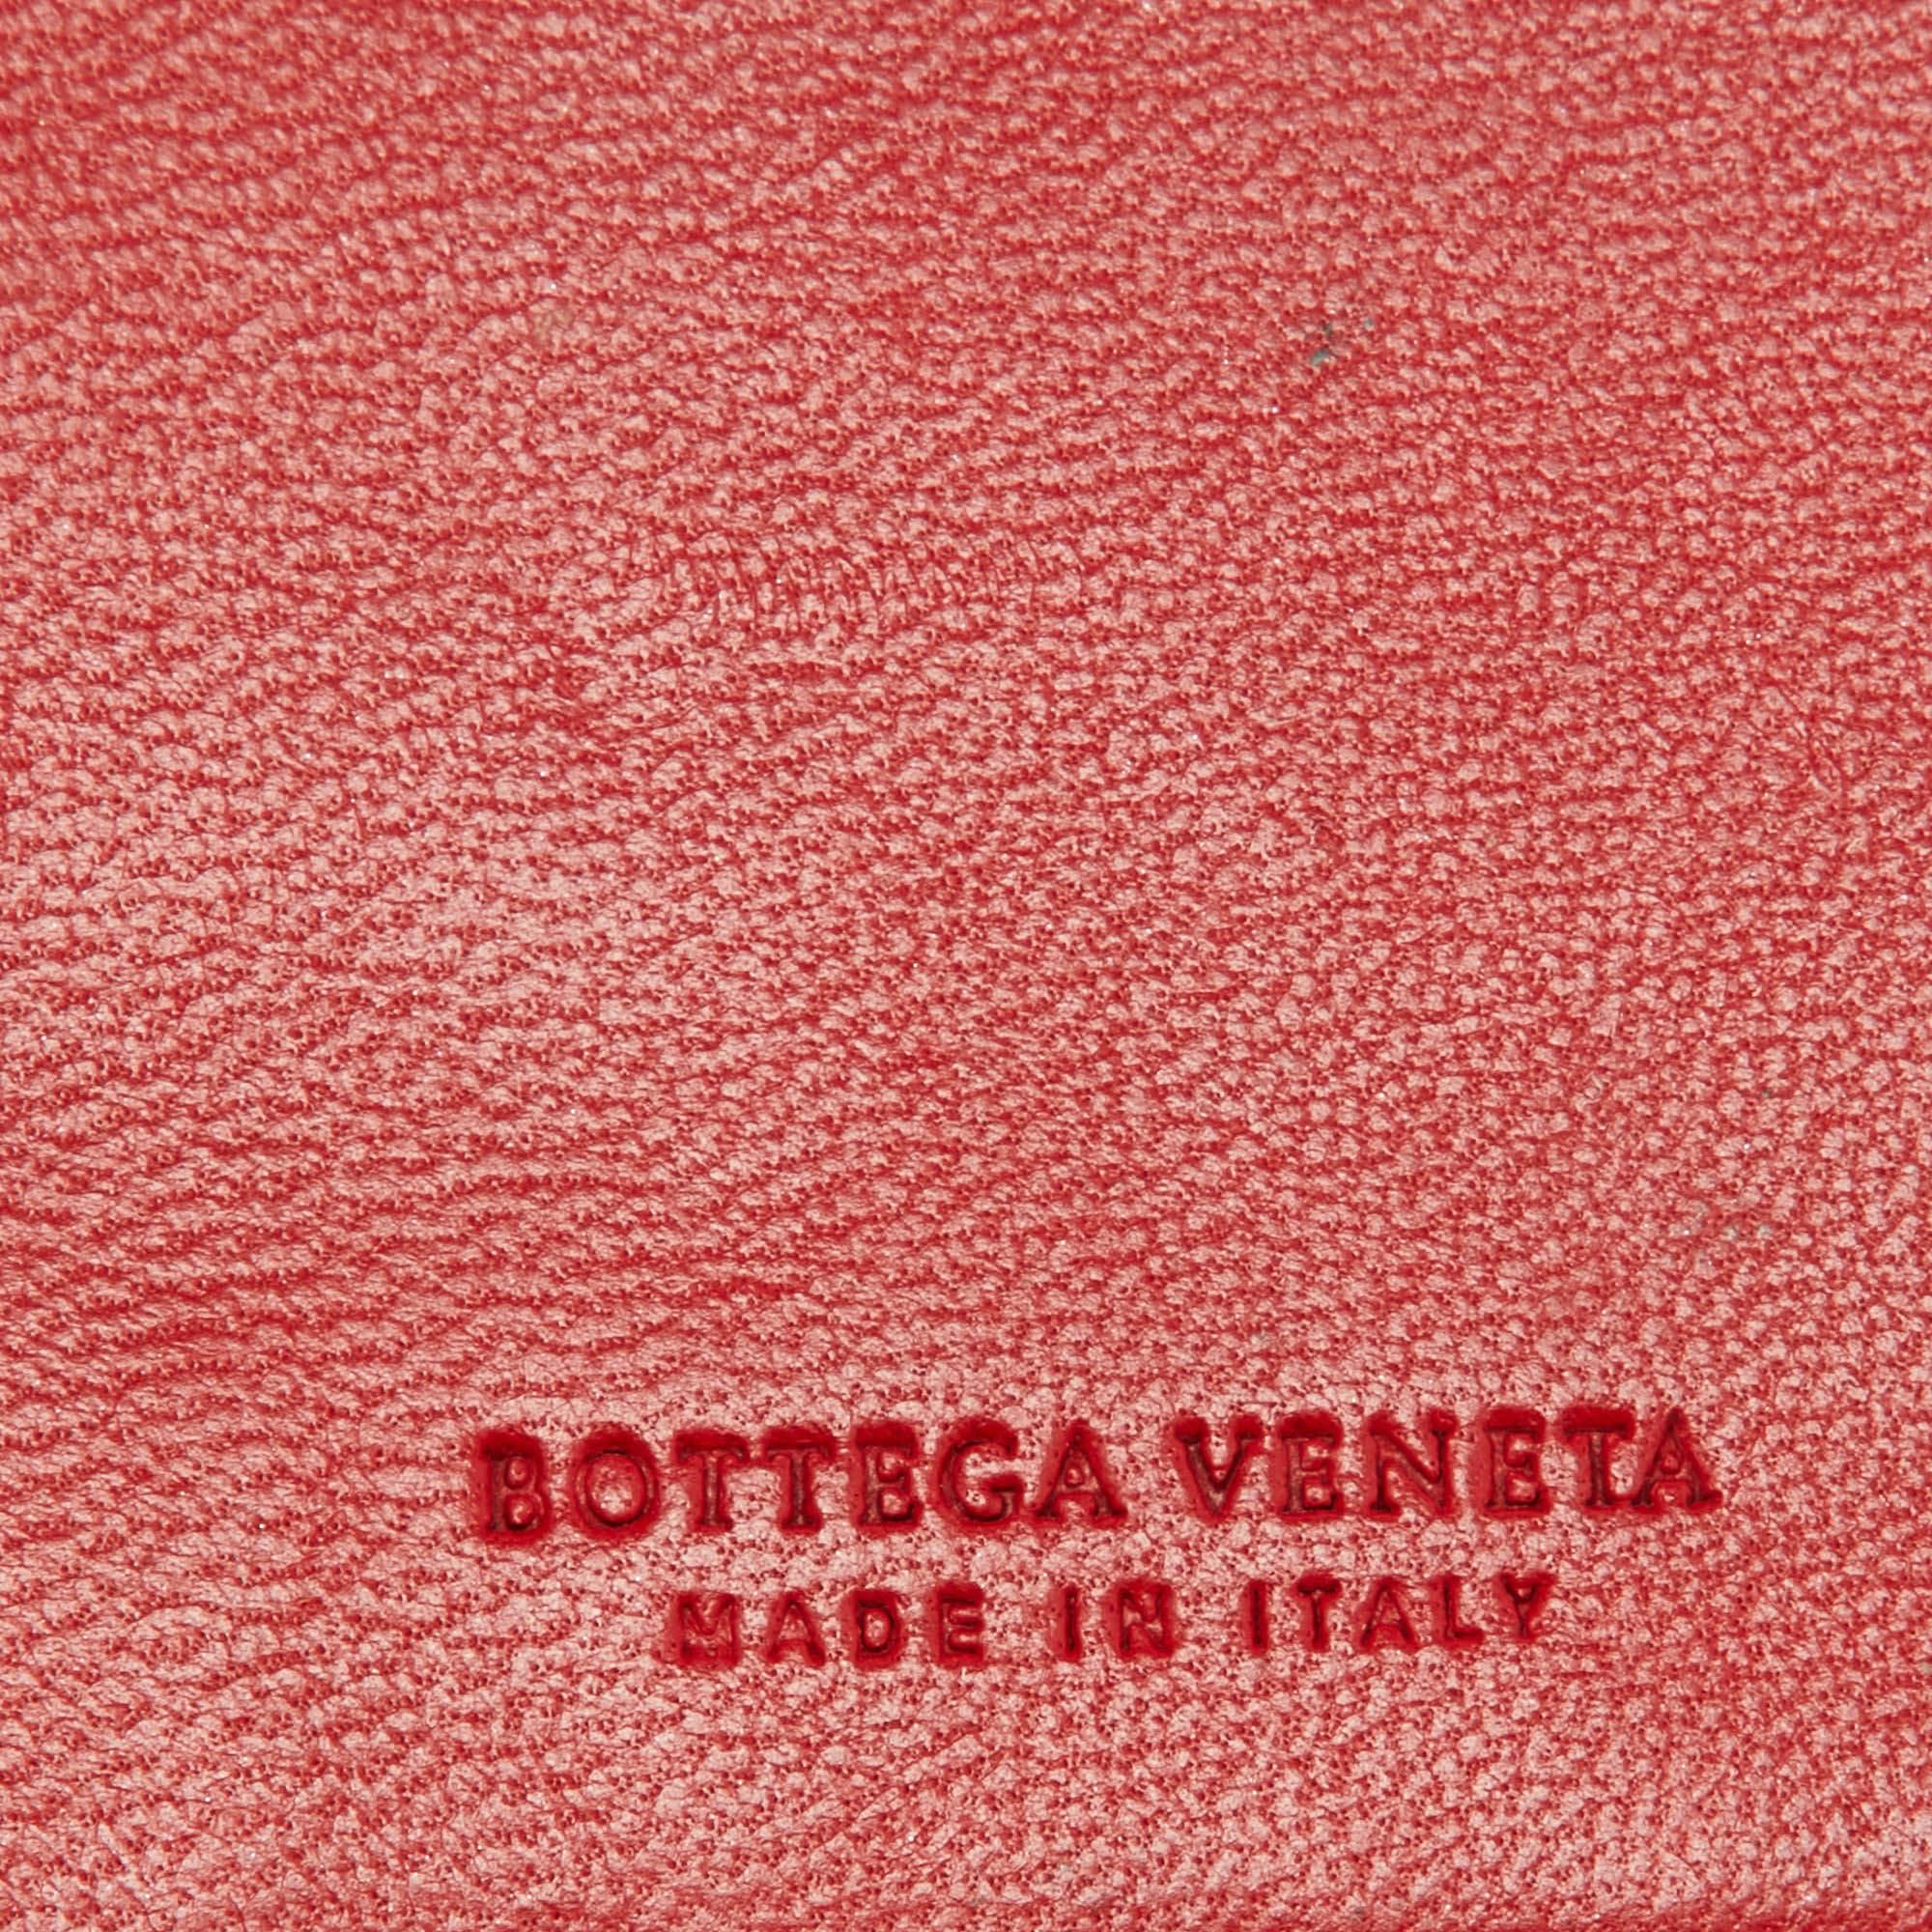 Bottega Veneta Red Intrecciato Leather Flap Continental Wallet For Sale 2